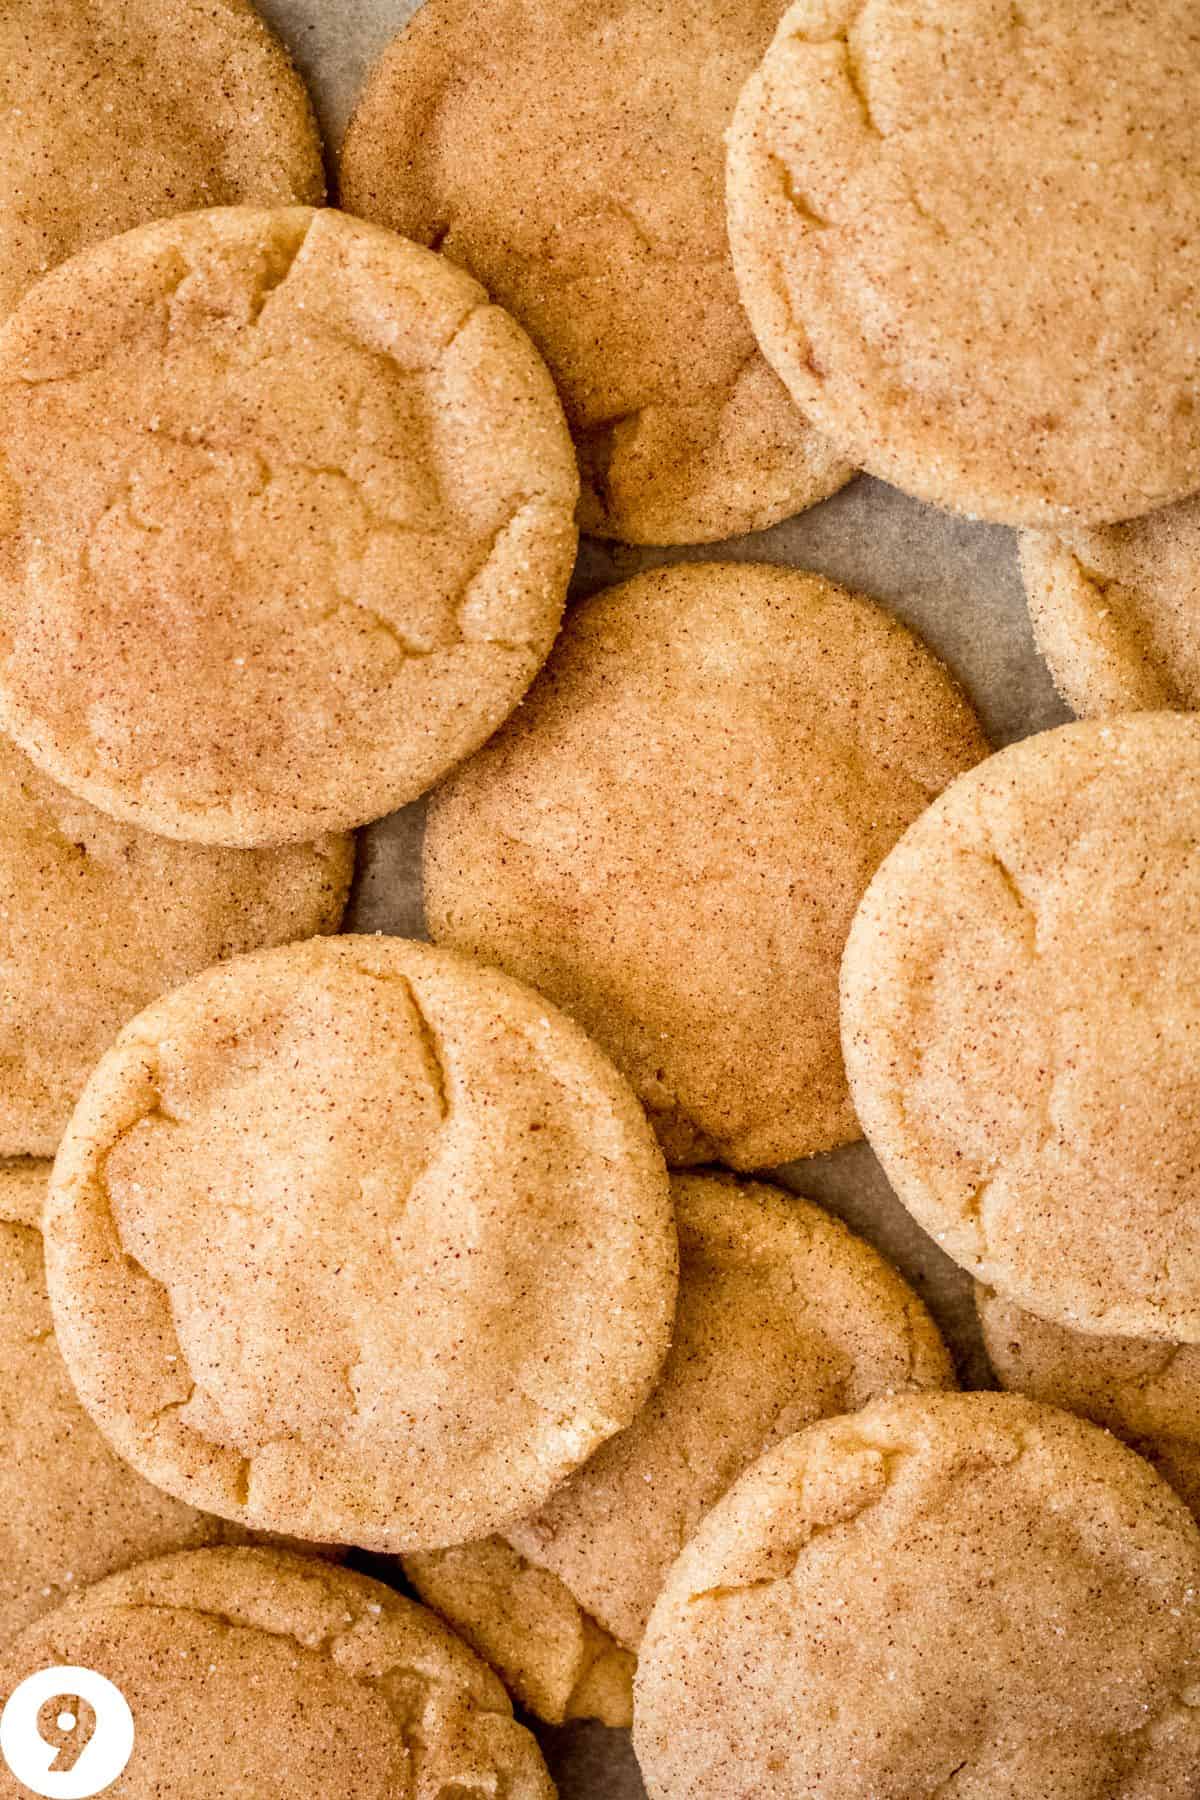 baked cookies on cookie sheet